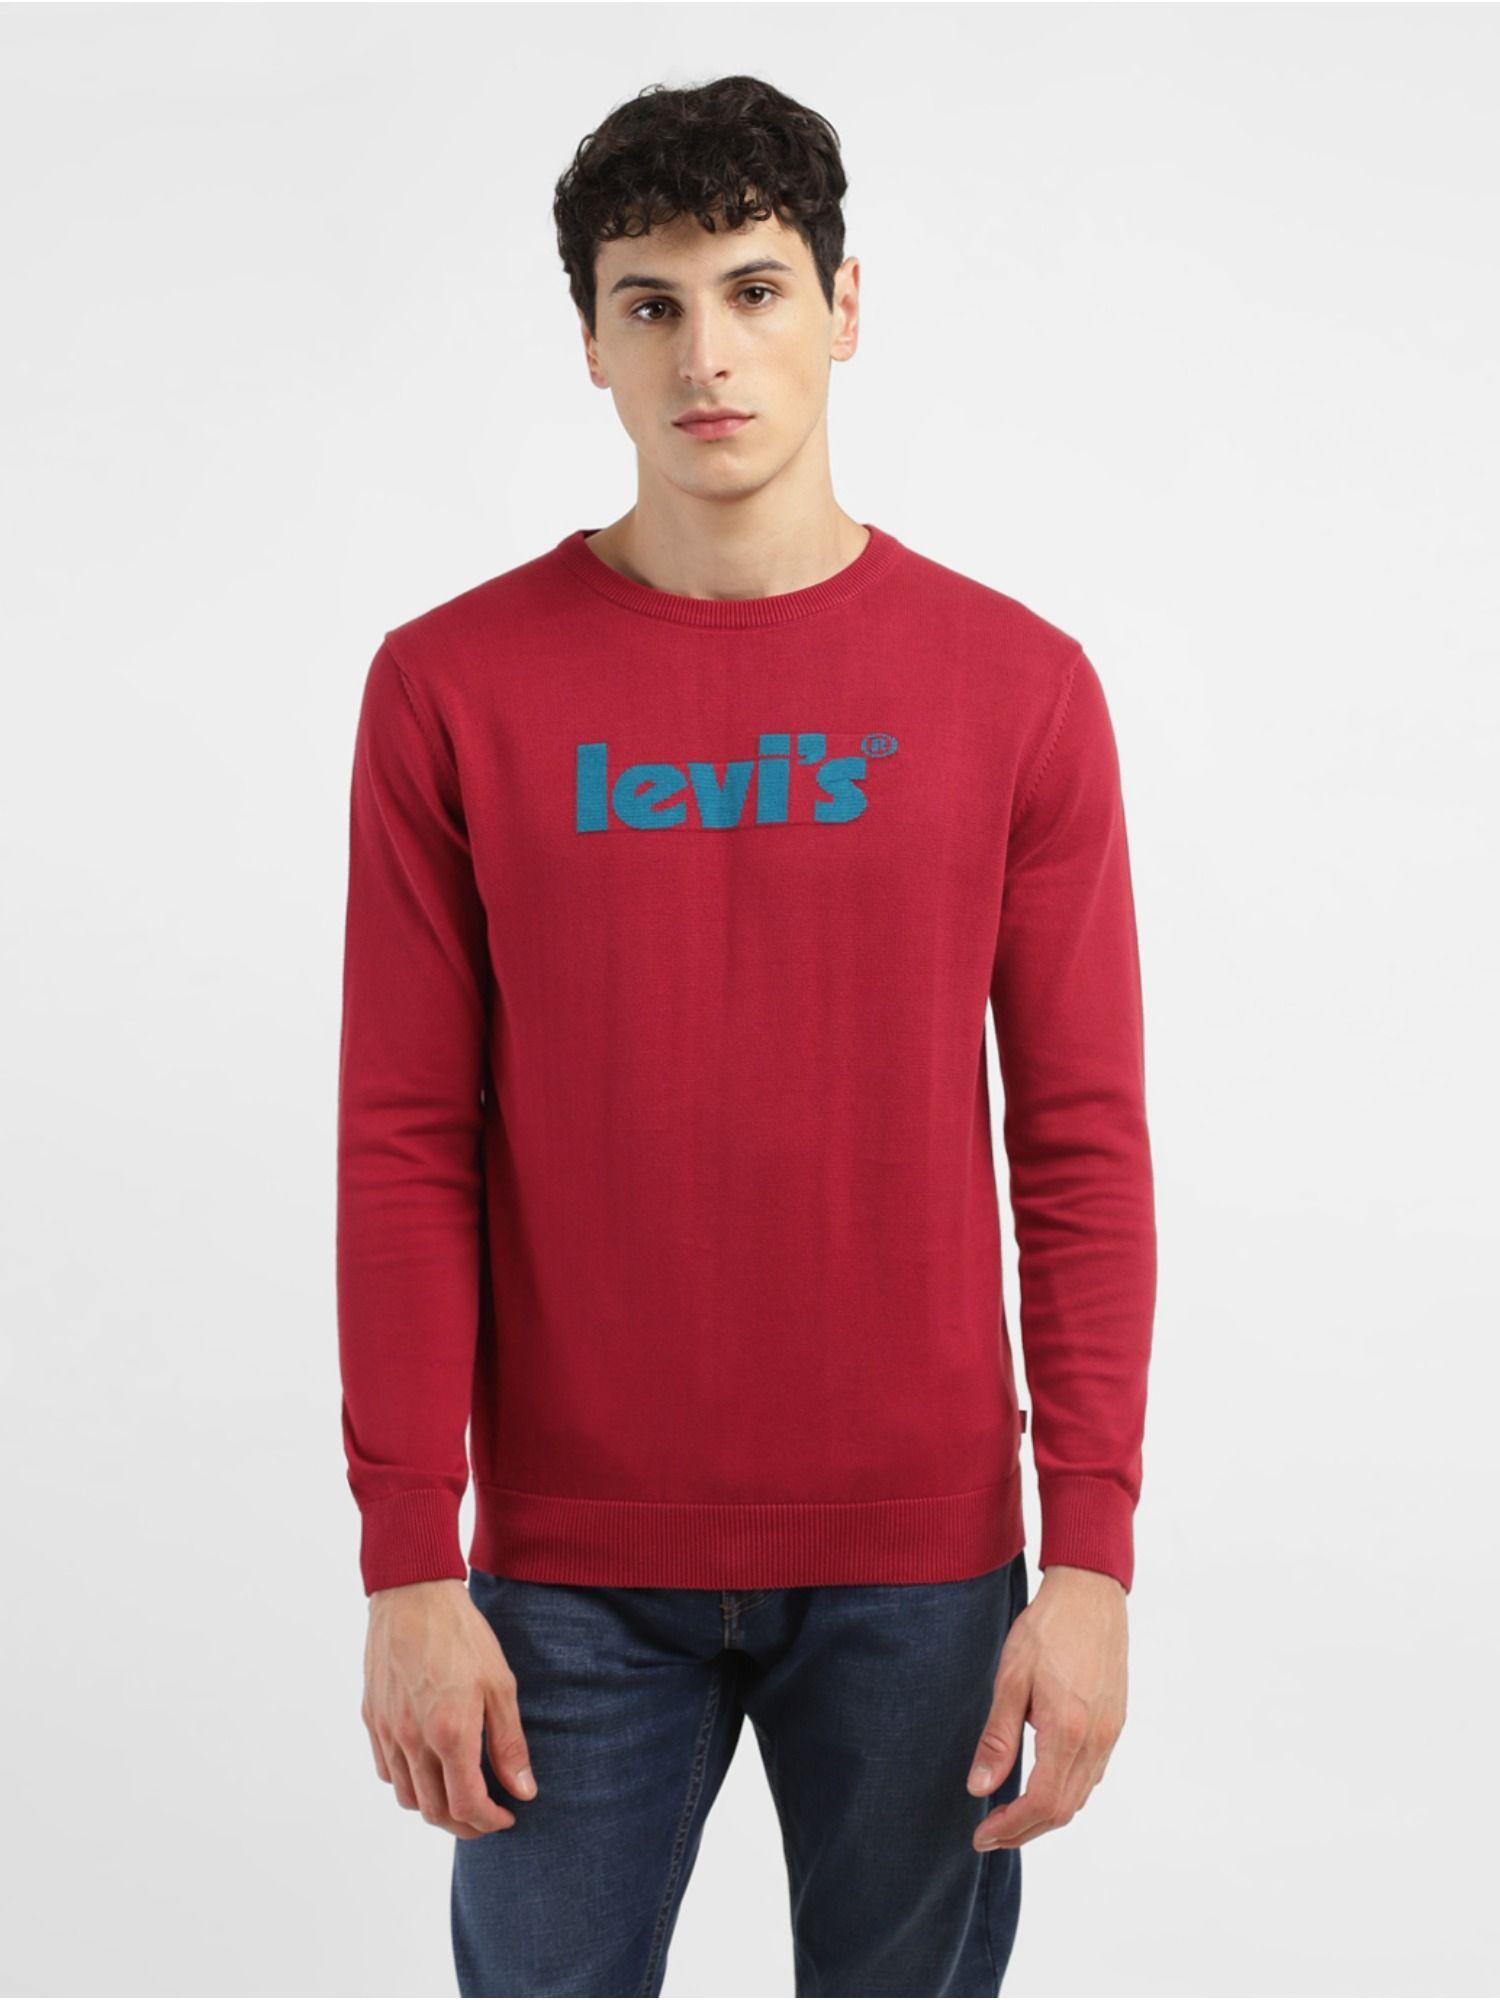 Men's Brand Logo Red Crew Neck Sweater